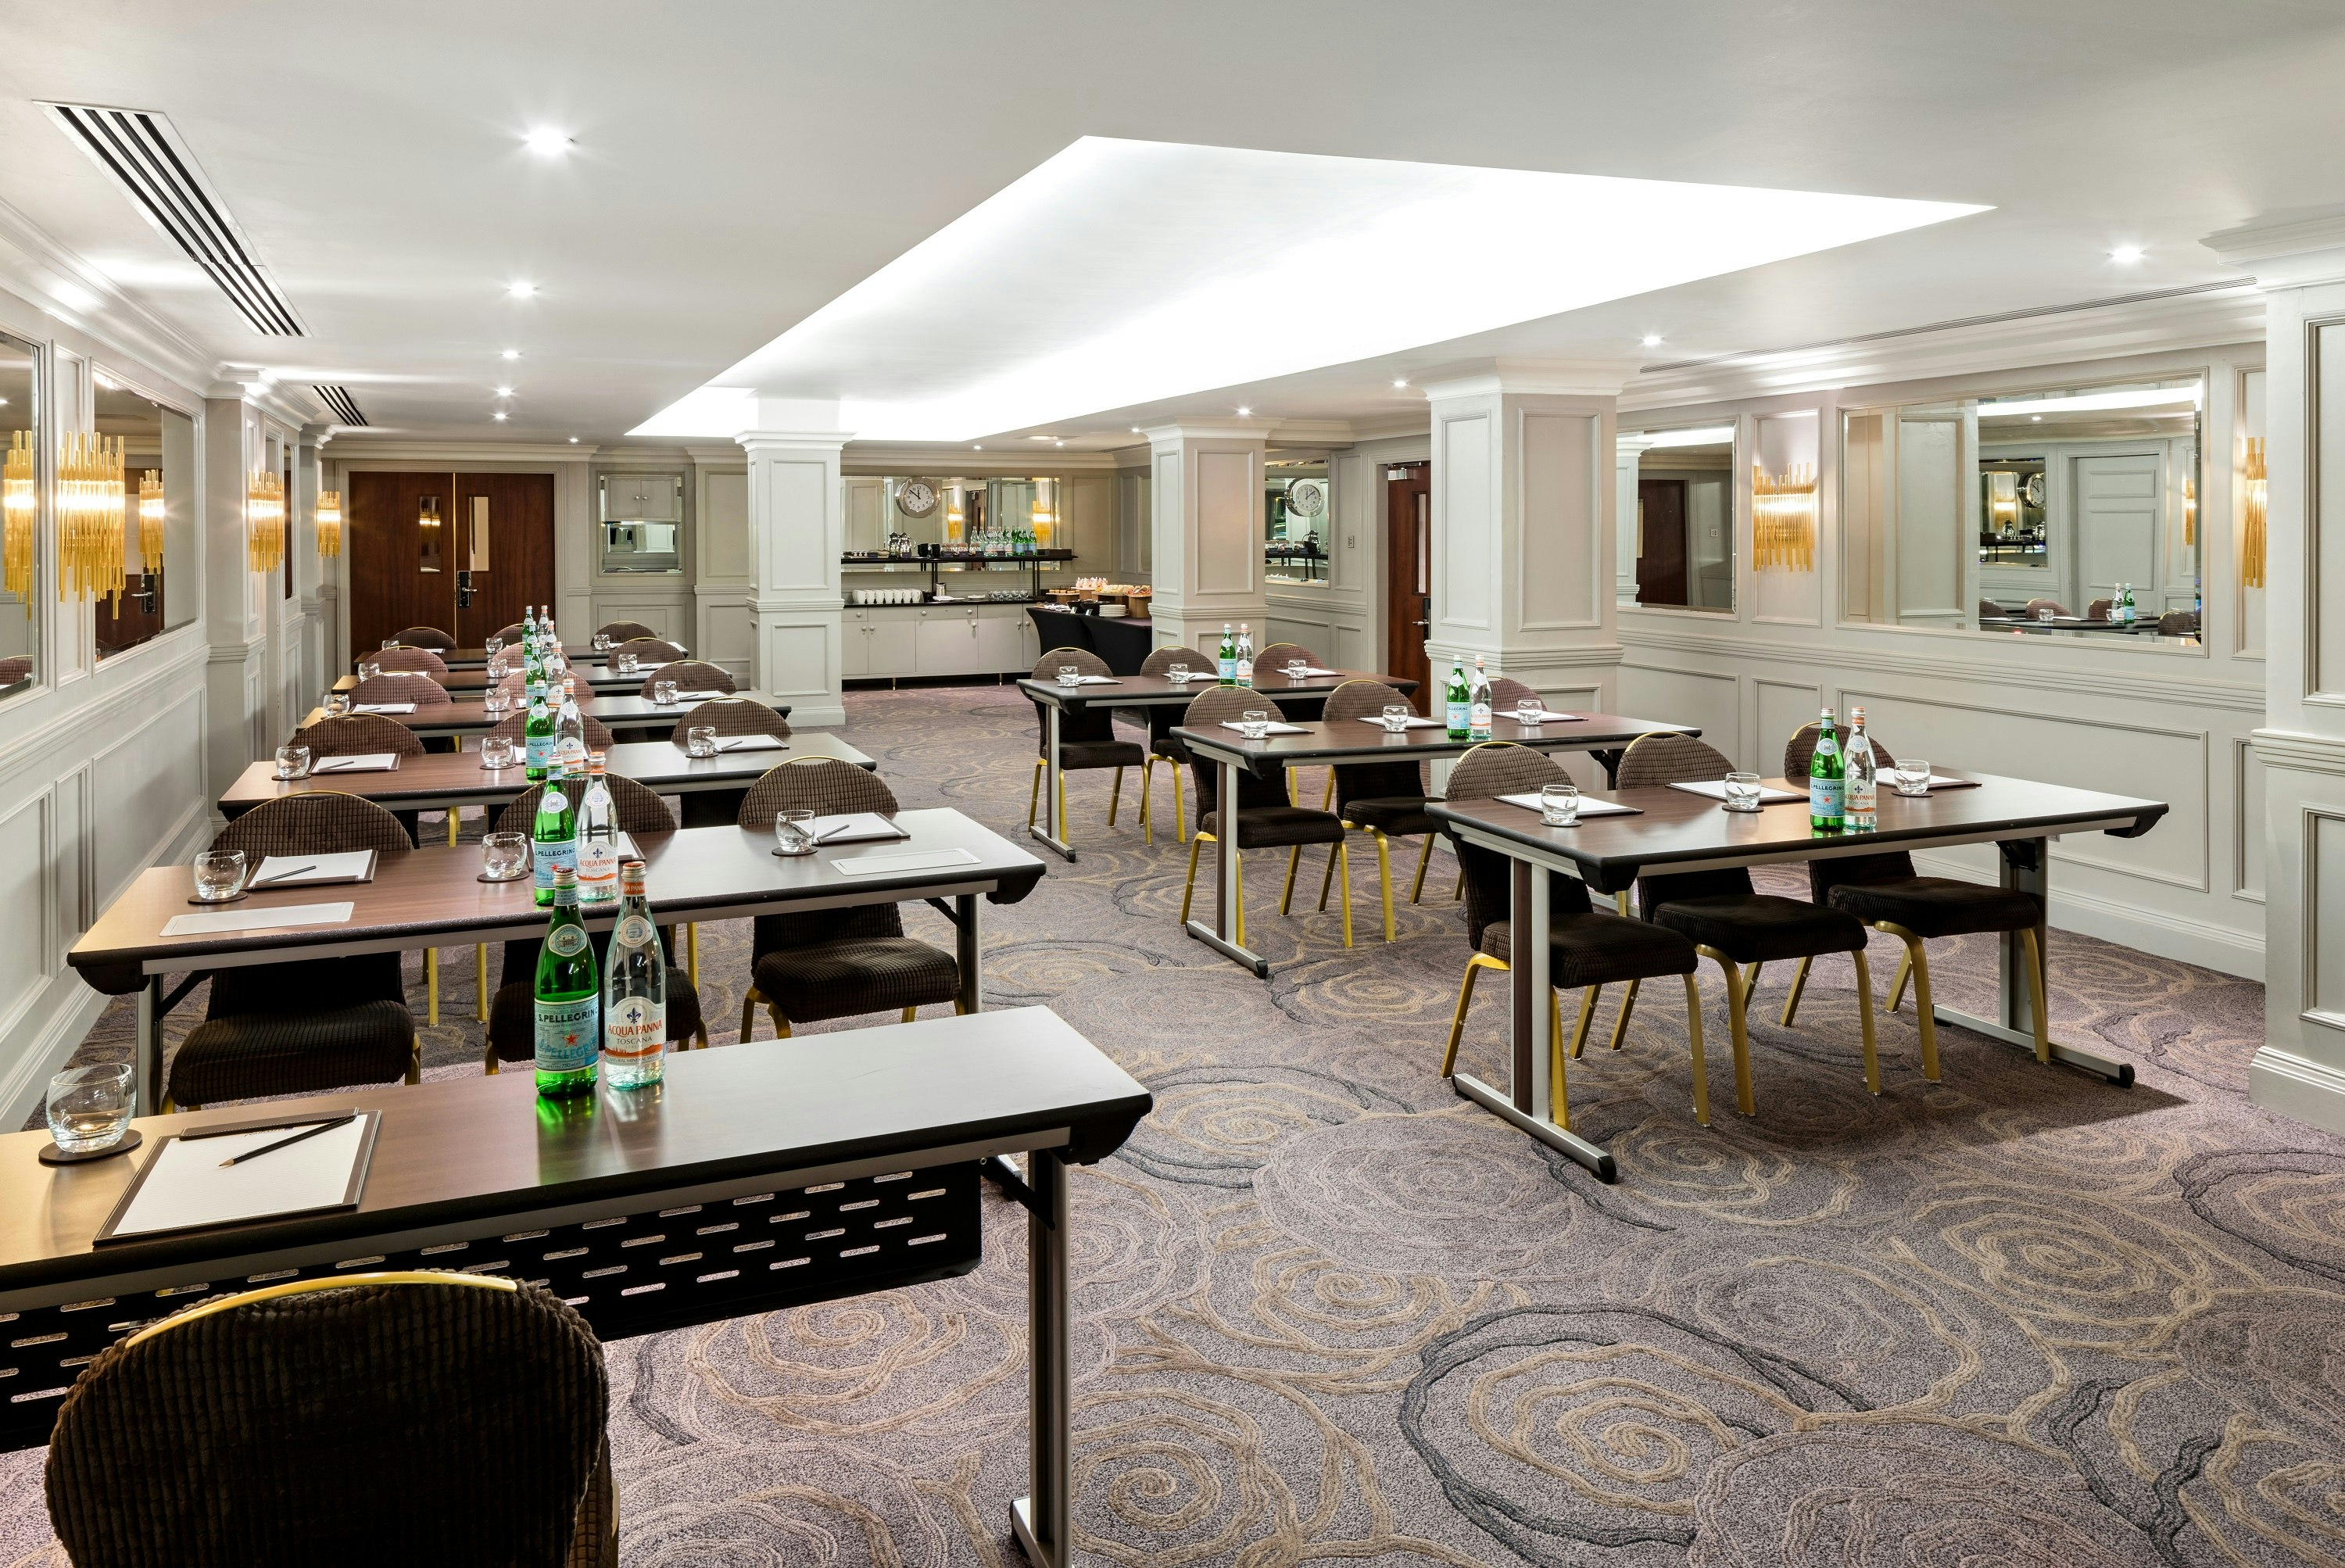 Hotel Function Rooms Venues in London - Radisson Blu Edwardian Grafton 